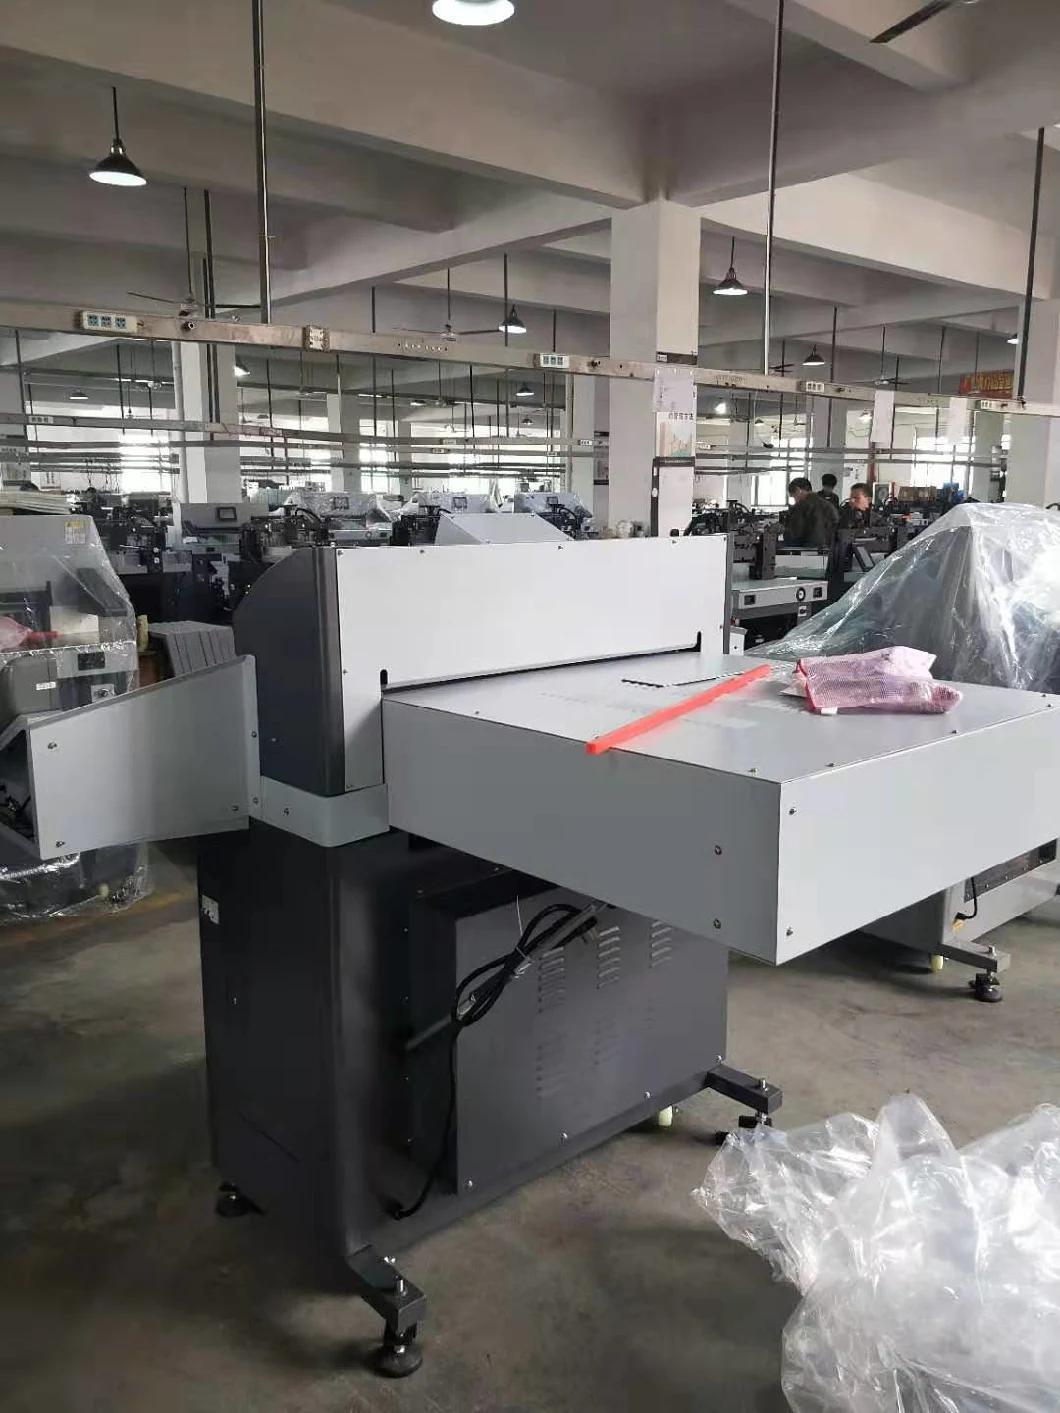 Popular Design H720rt Heavy Duty Paper Cutter Paper Cutting Machine Programmable